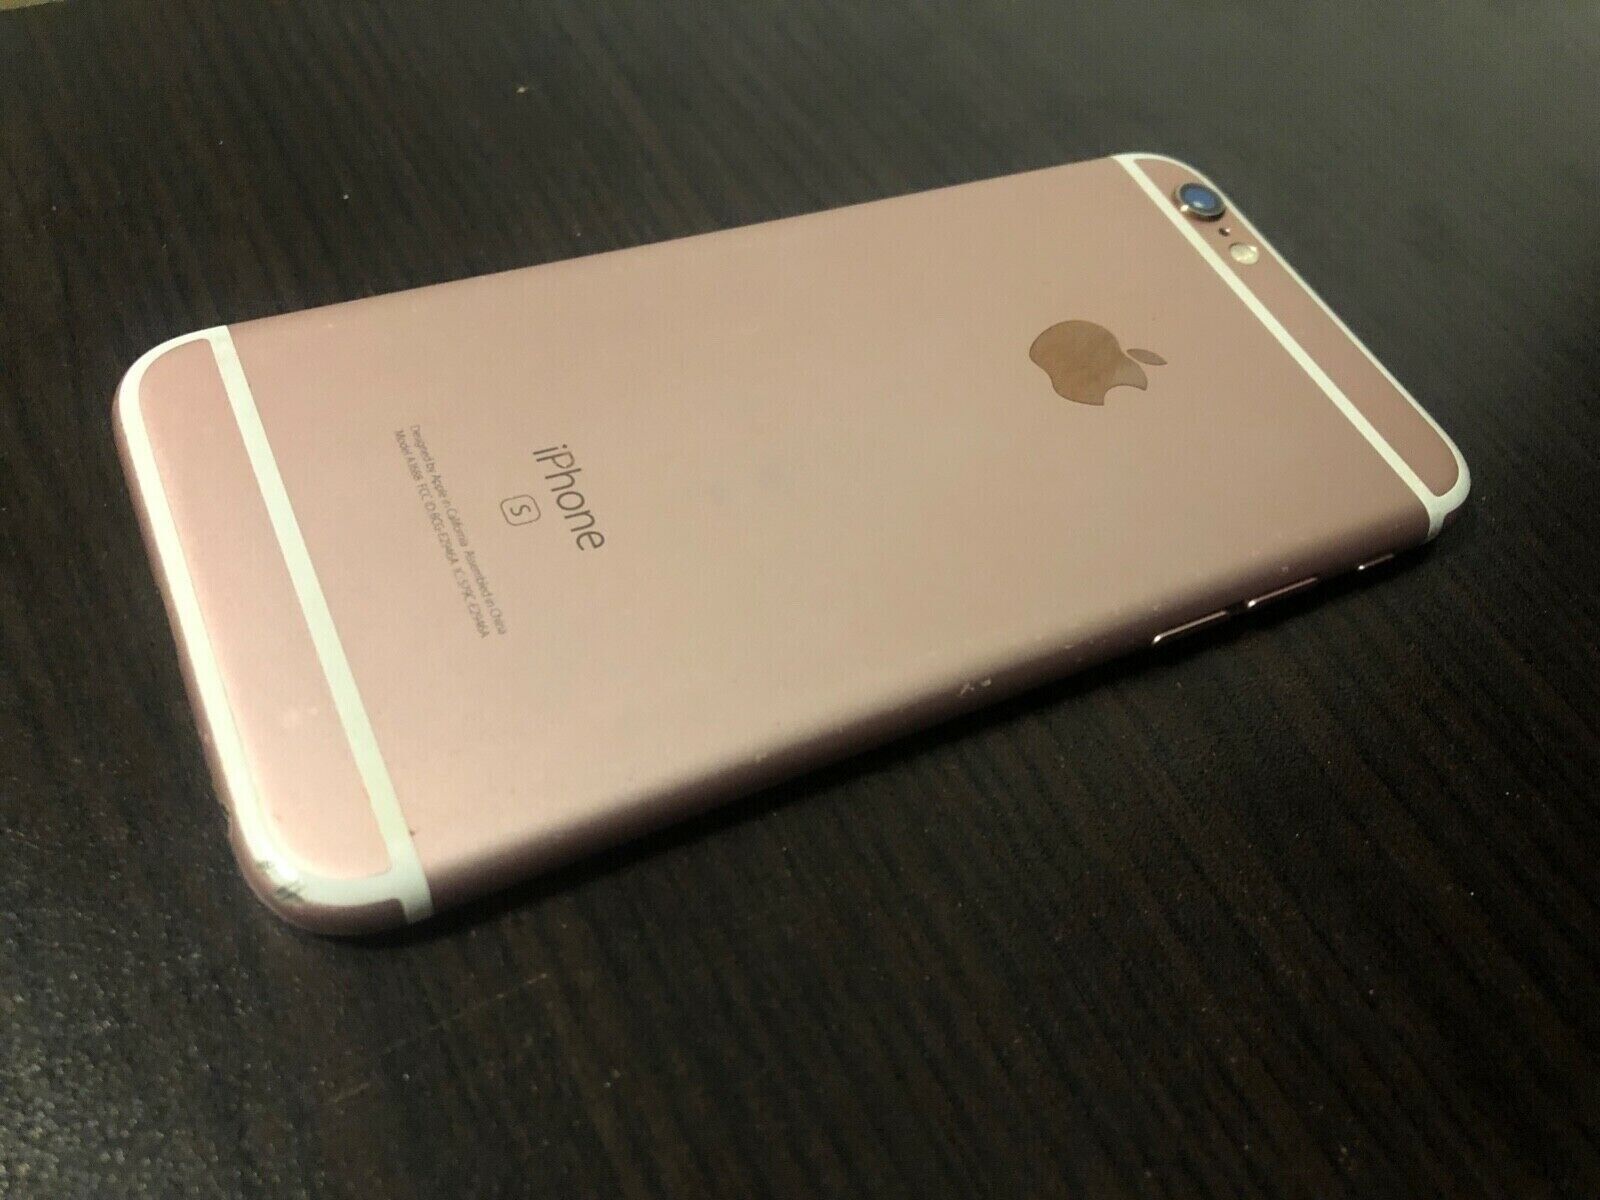 Apple iPhone 6s - 64GB - Rose Gold (Unlocked) A1688 (CDMA + GSM 